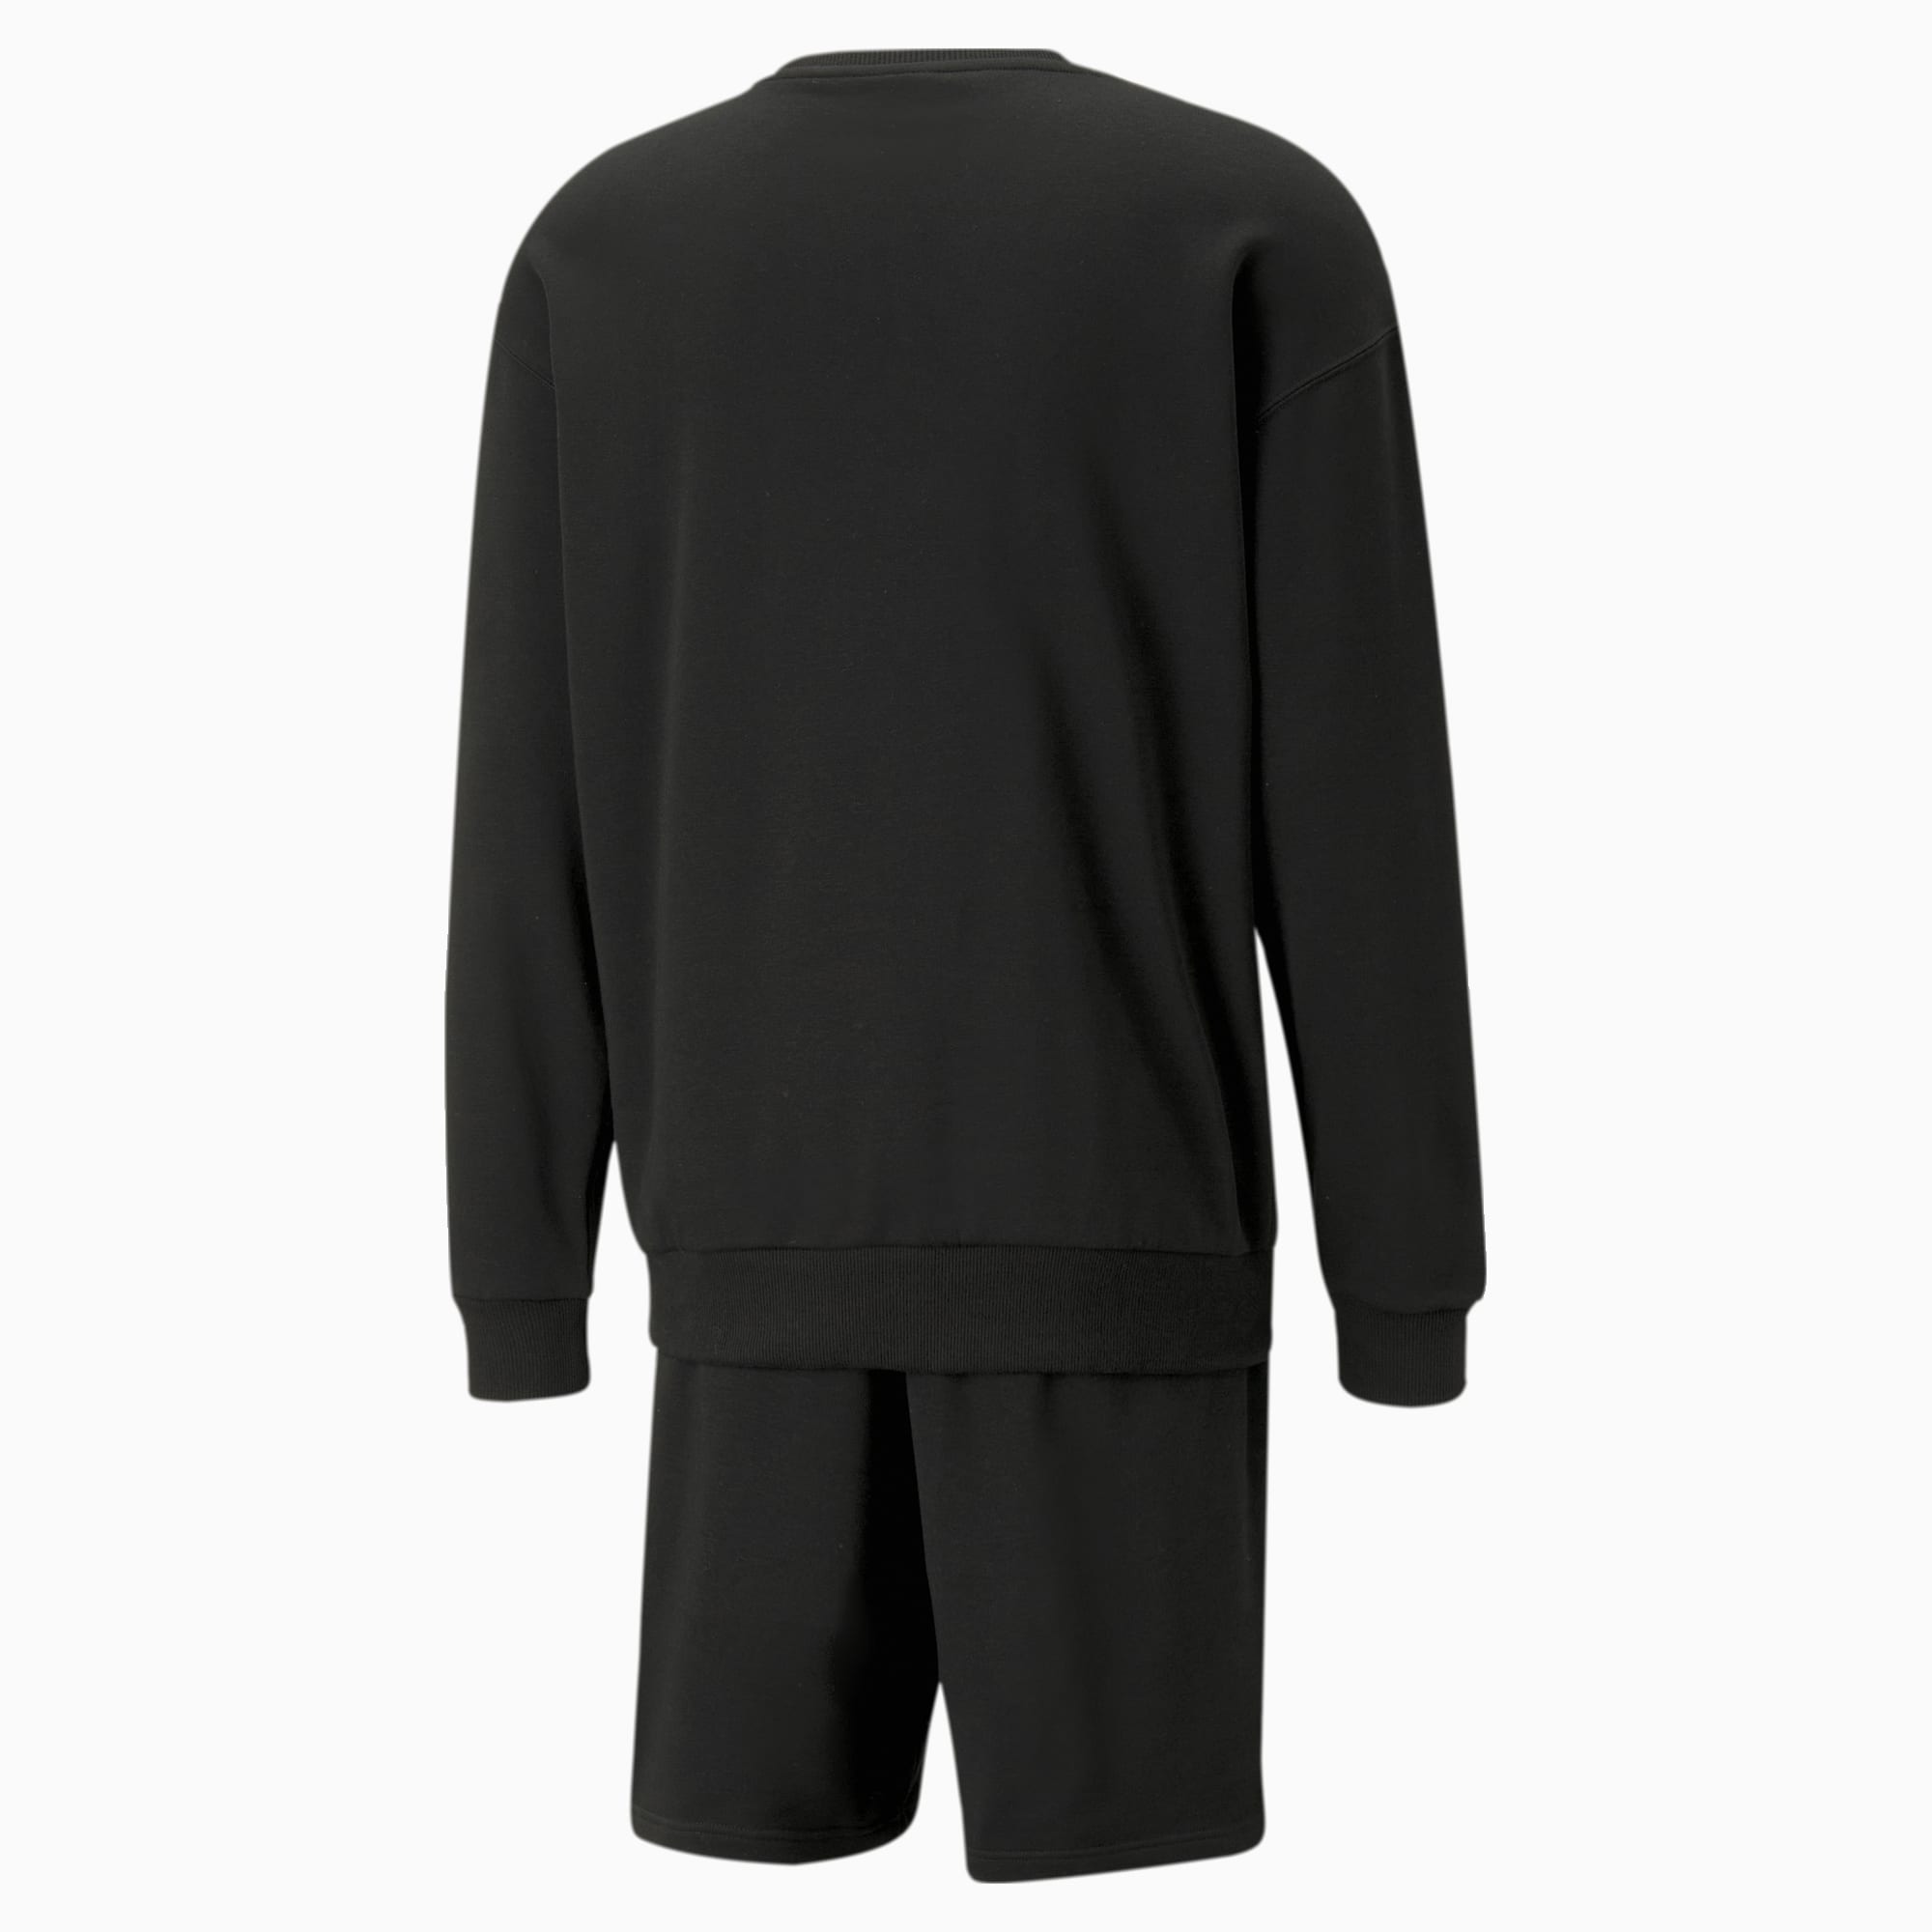 PUMA Relaxed Sweatsuit Men, Black, Size XL